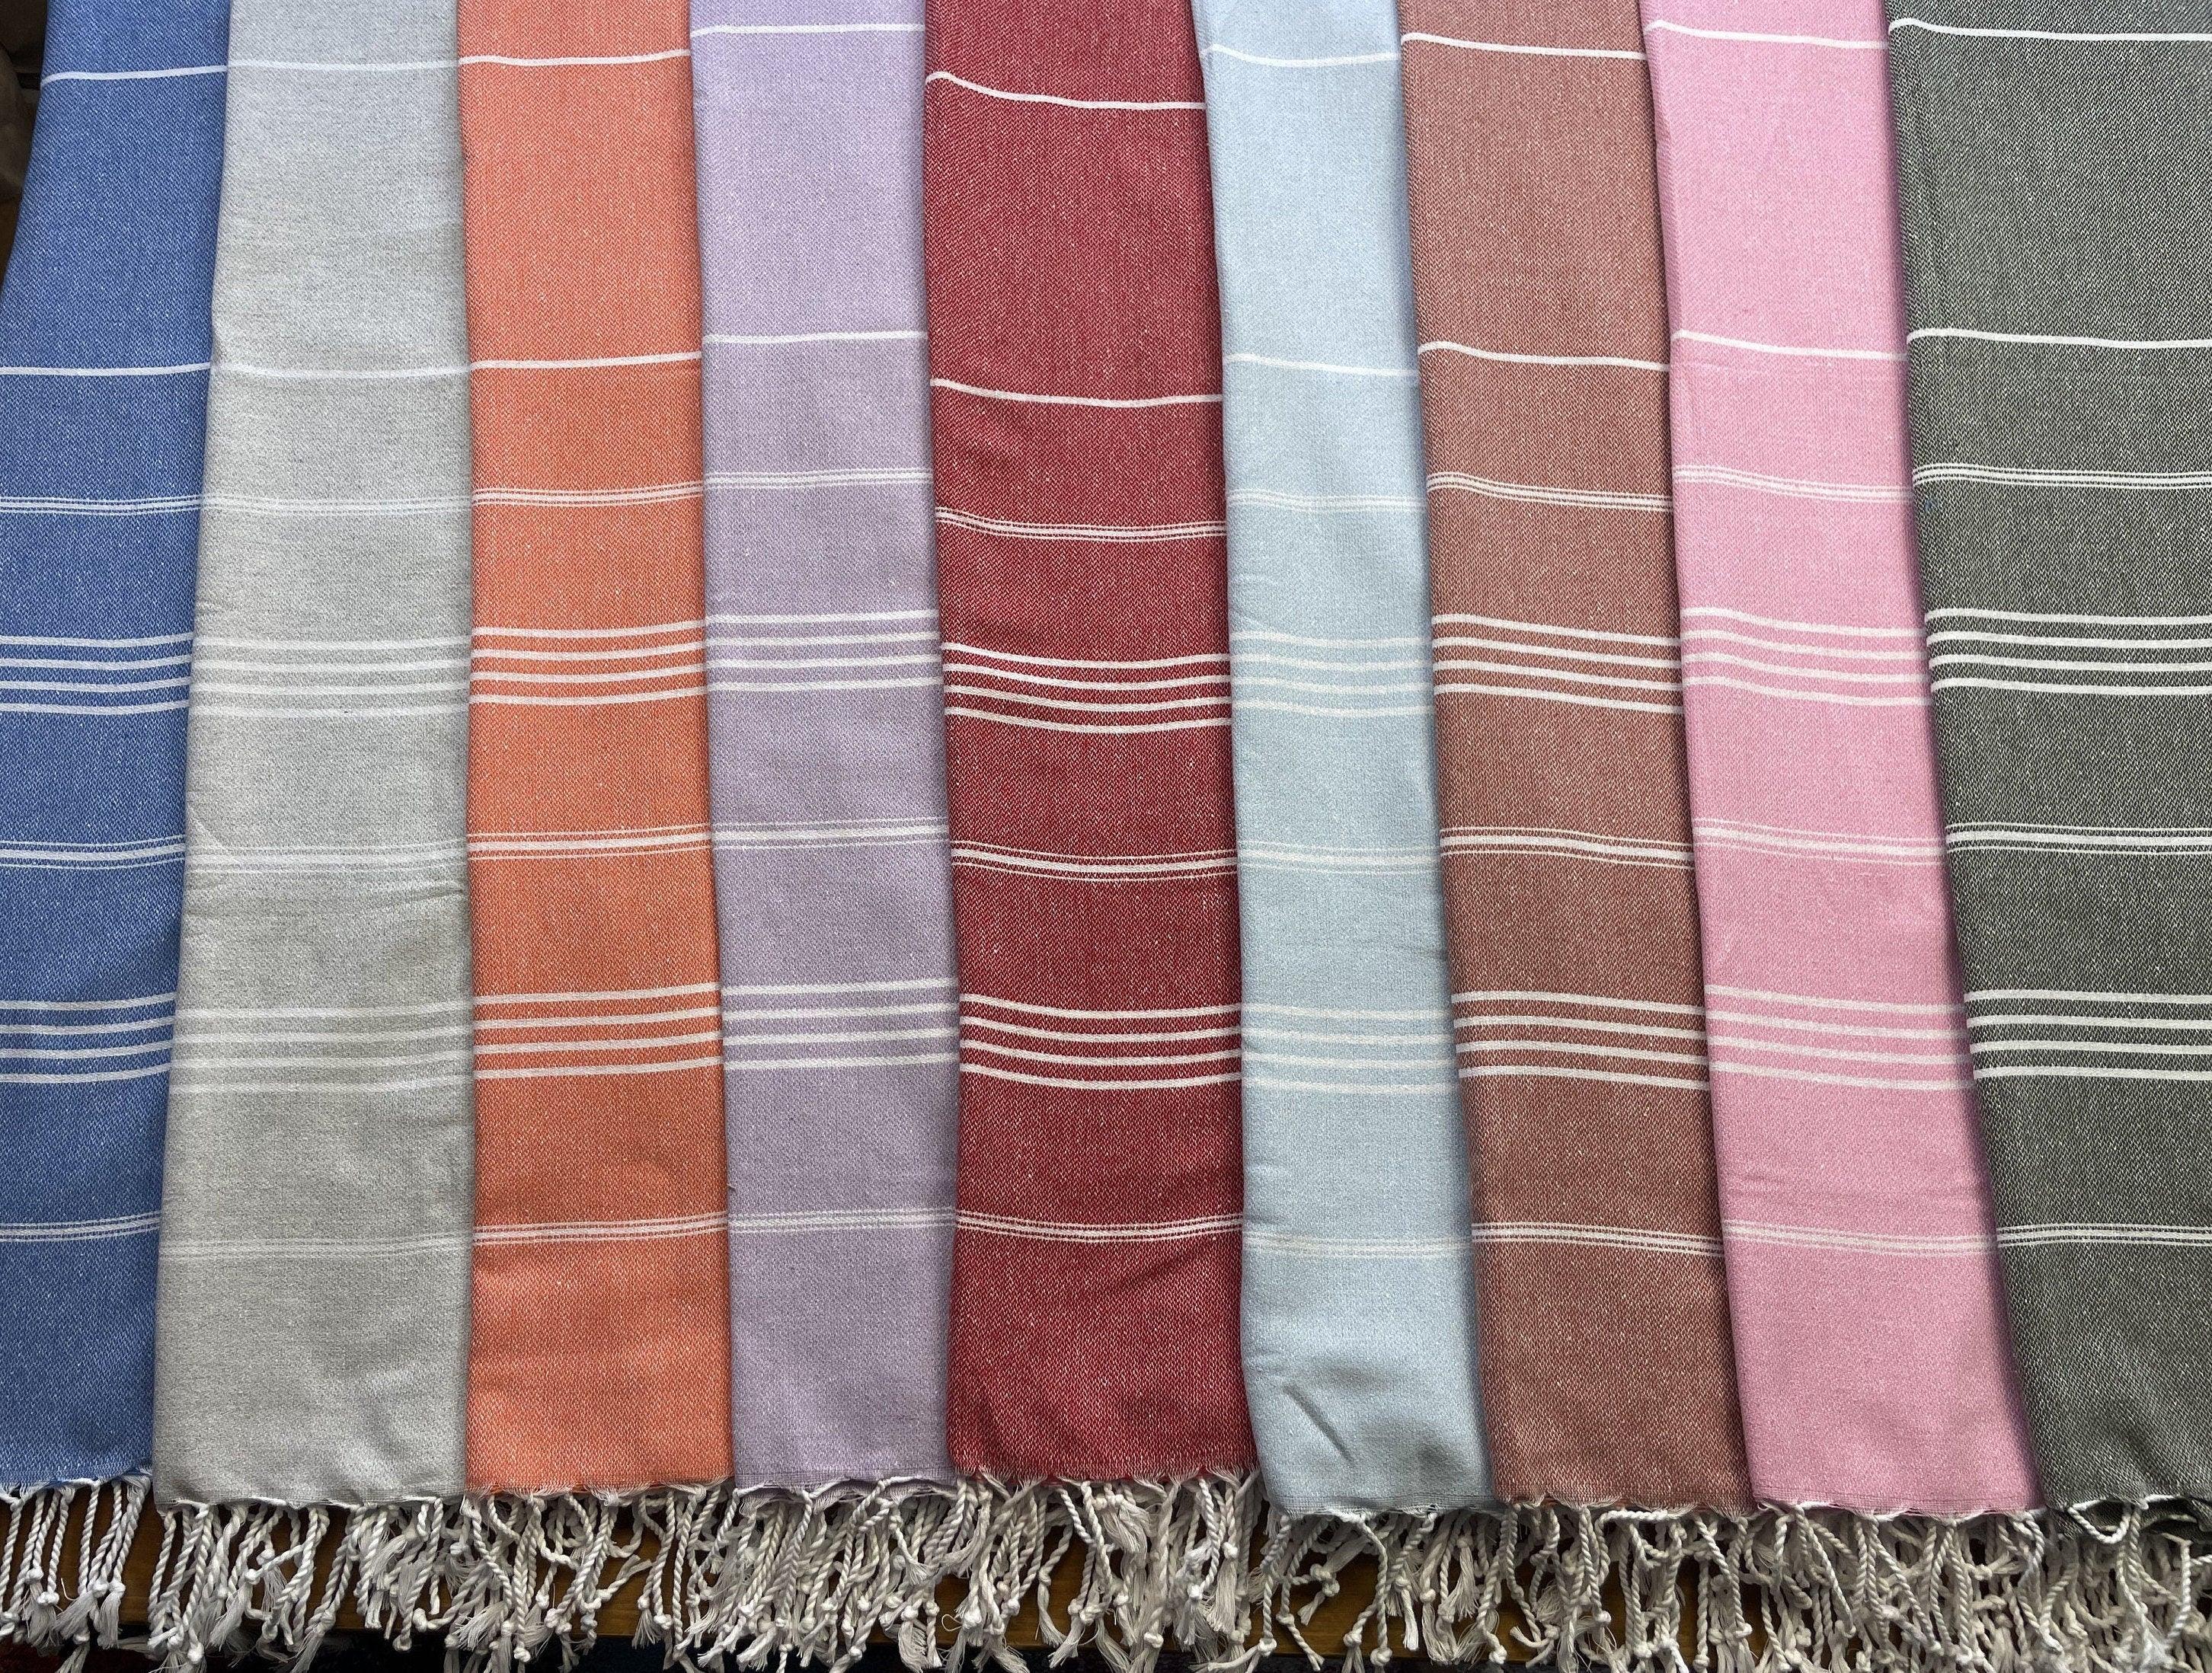 High-Quality Turkish Peshtemal Towel, Turkish Bath Towel, Cotton Bath Towel, 100% Cotton Towel, Turkish Towel Beach, Striped Peshtemal, Holiday Towels available at Moyoni Design